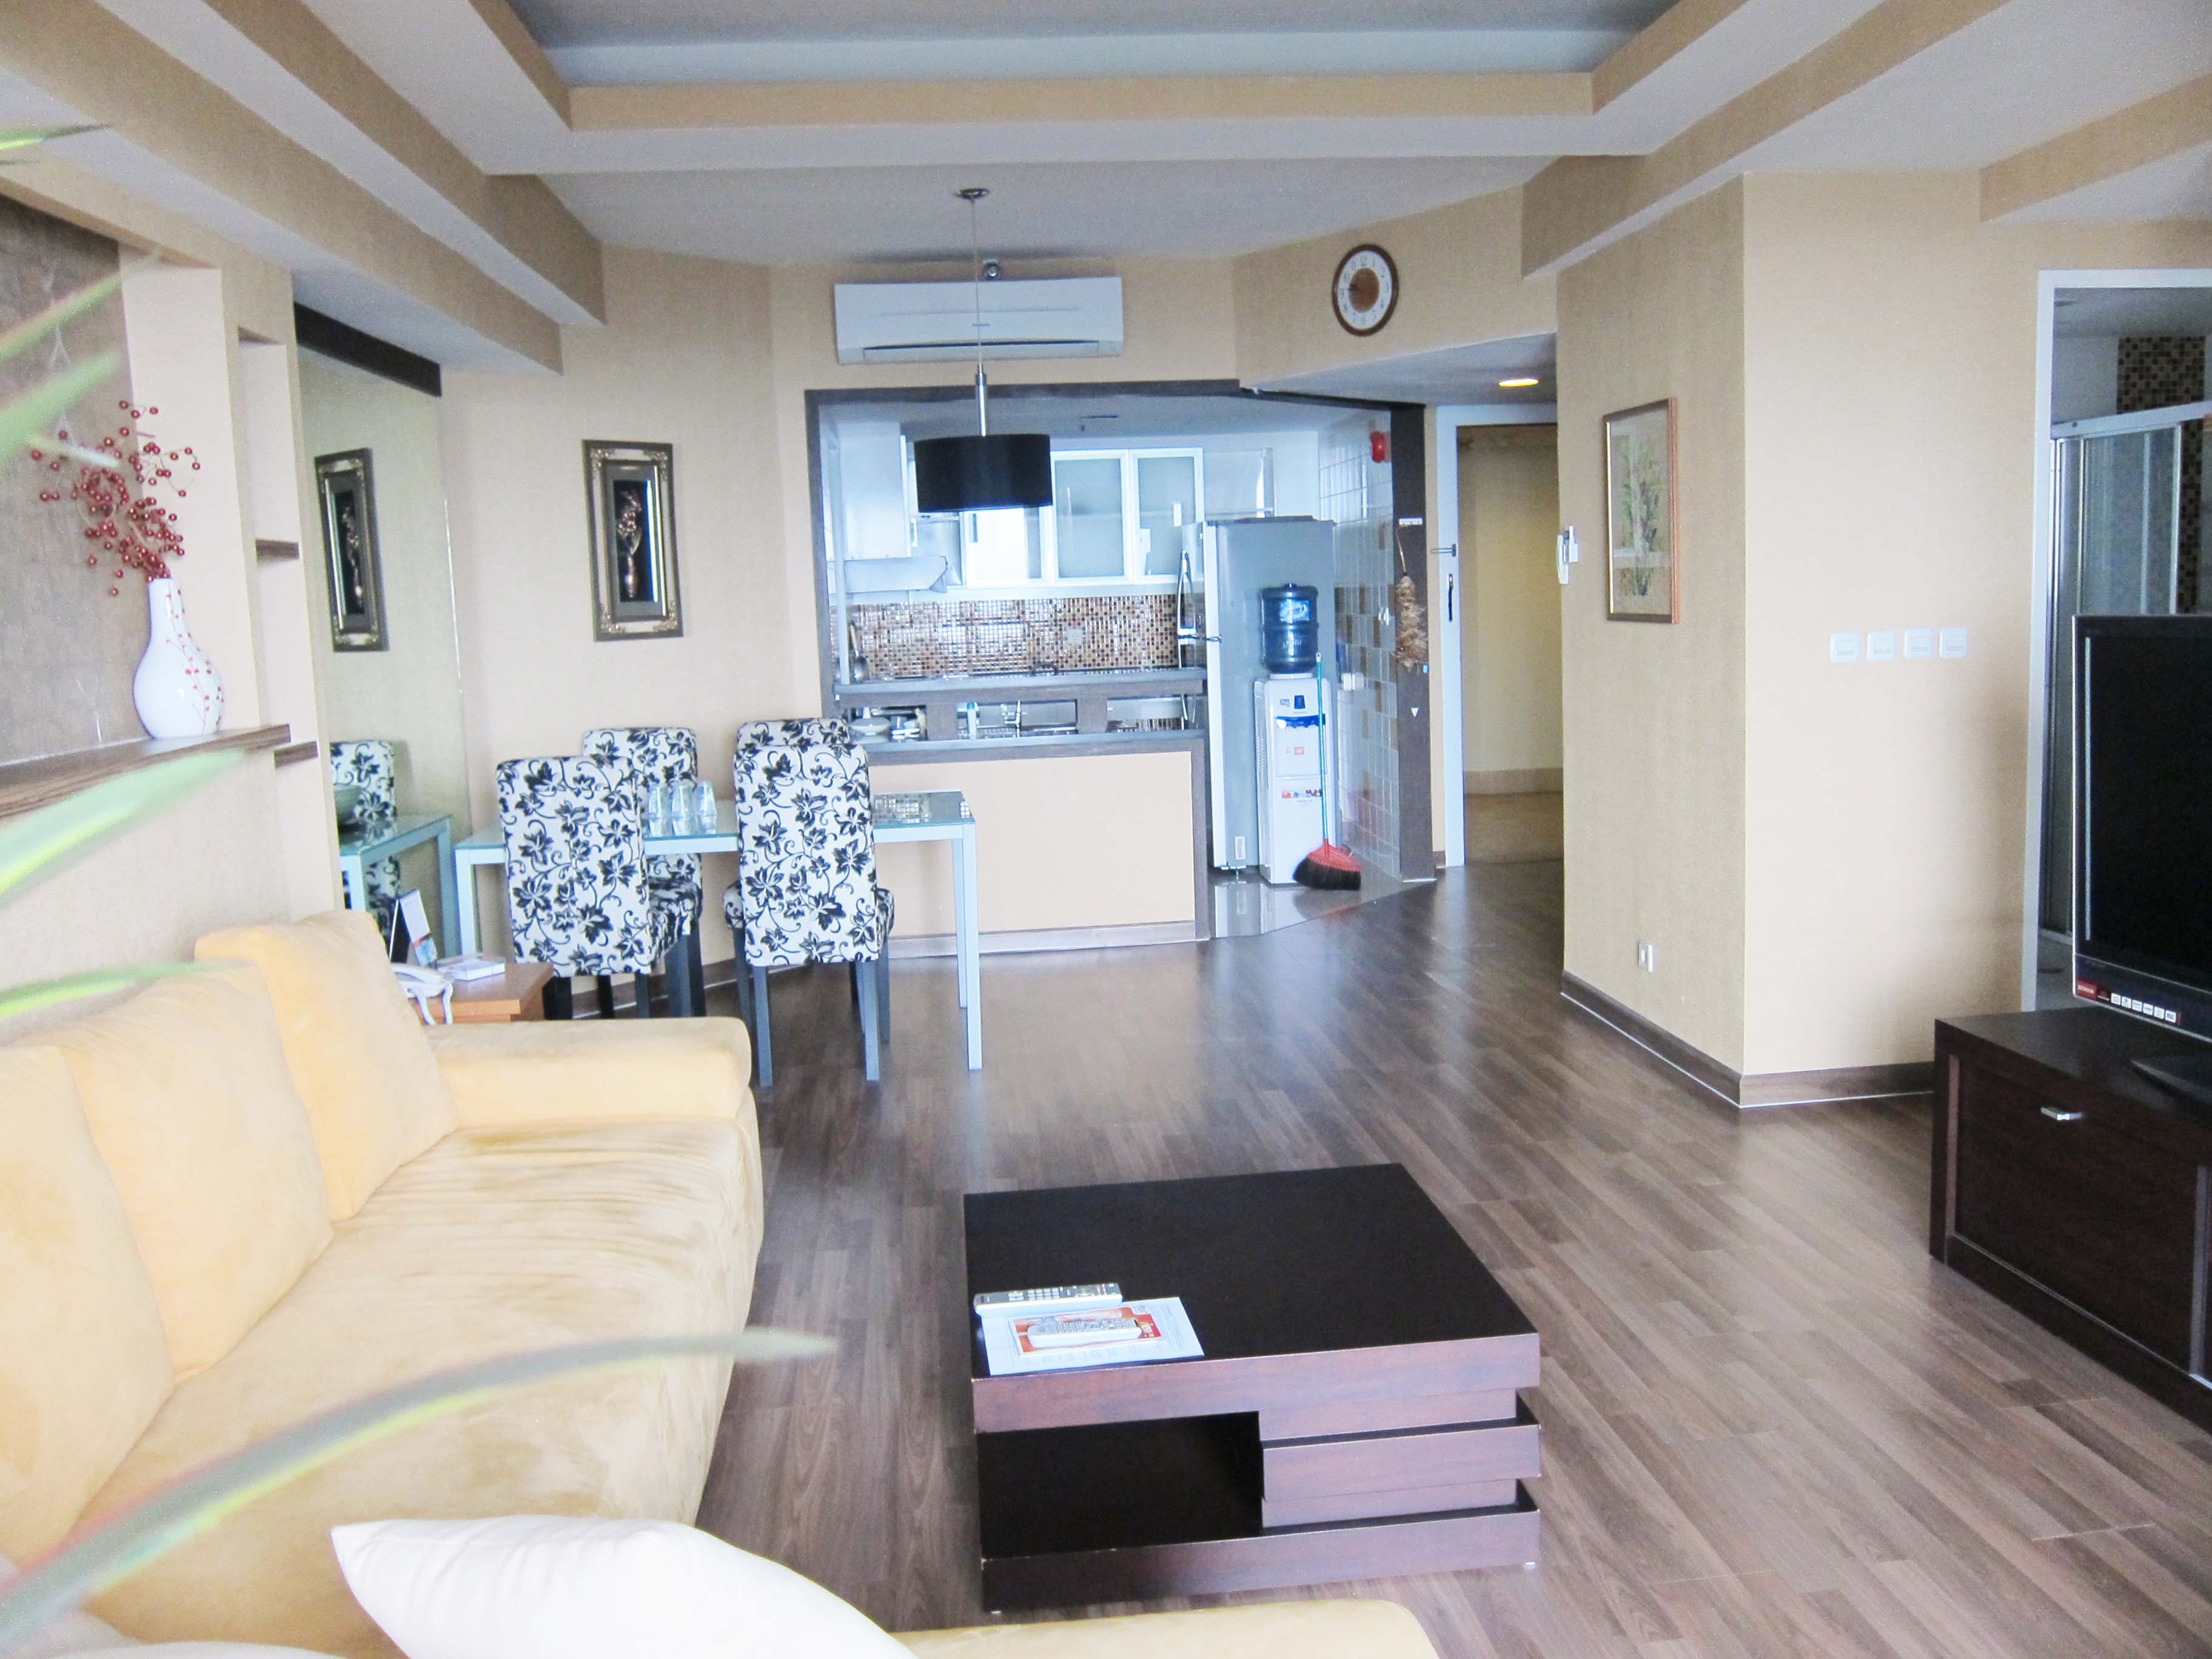 2 Bedrooms Rent Sell And Rent Taman Anggrek Apartment